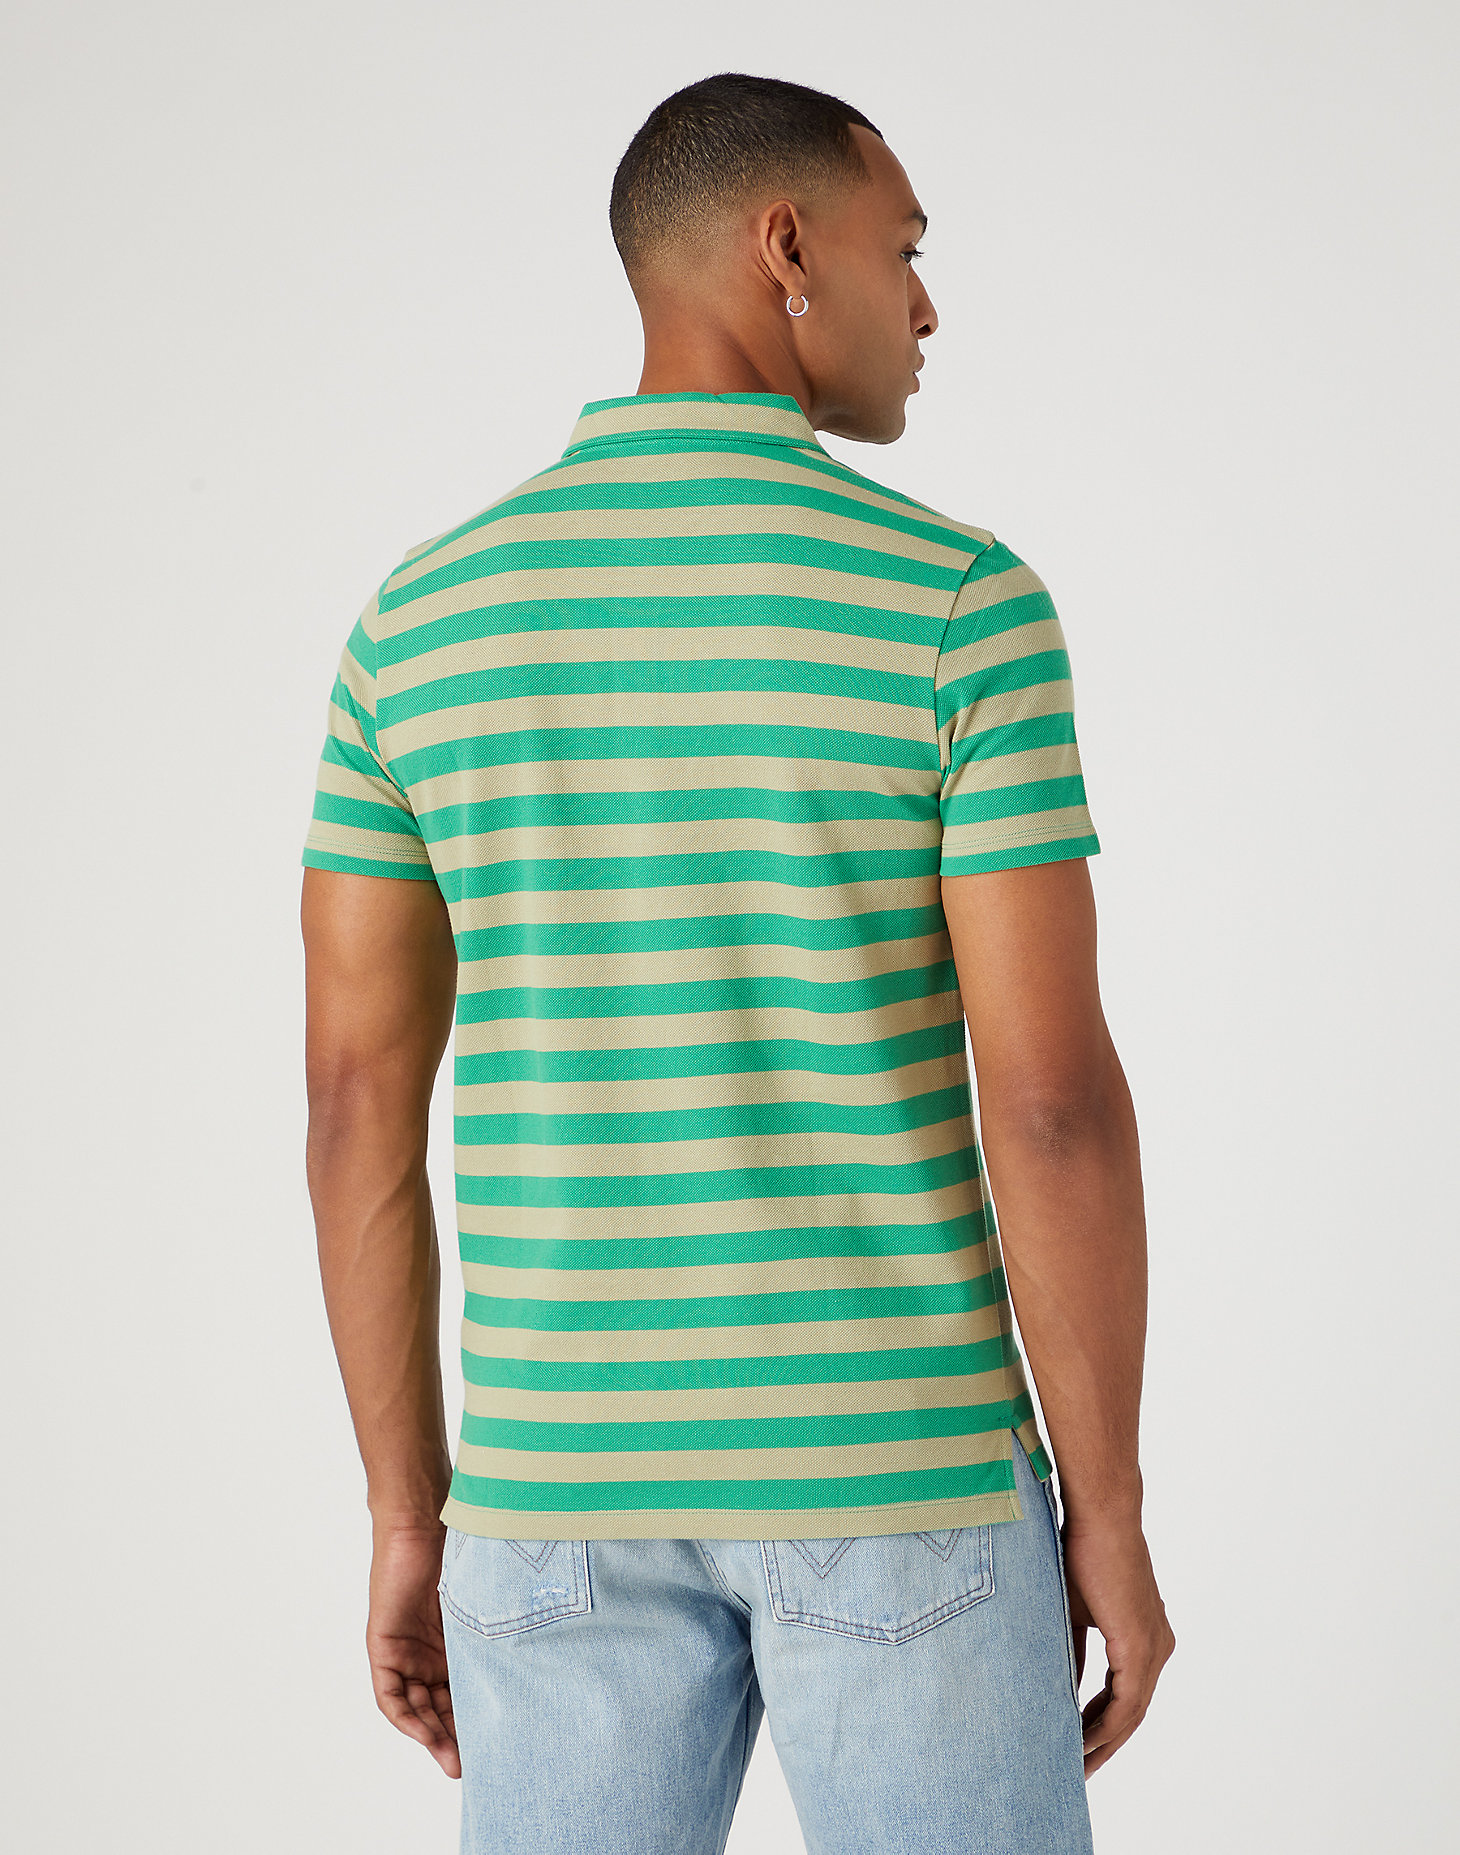 Stripe Polo Shirt in Tea Leaf alternative view 2